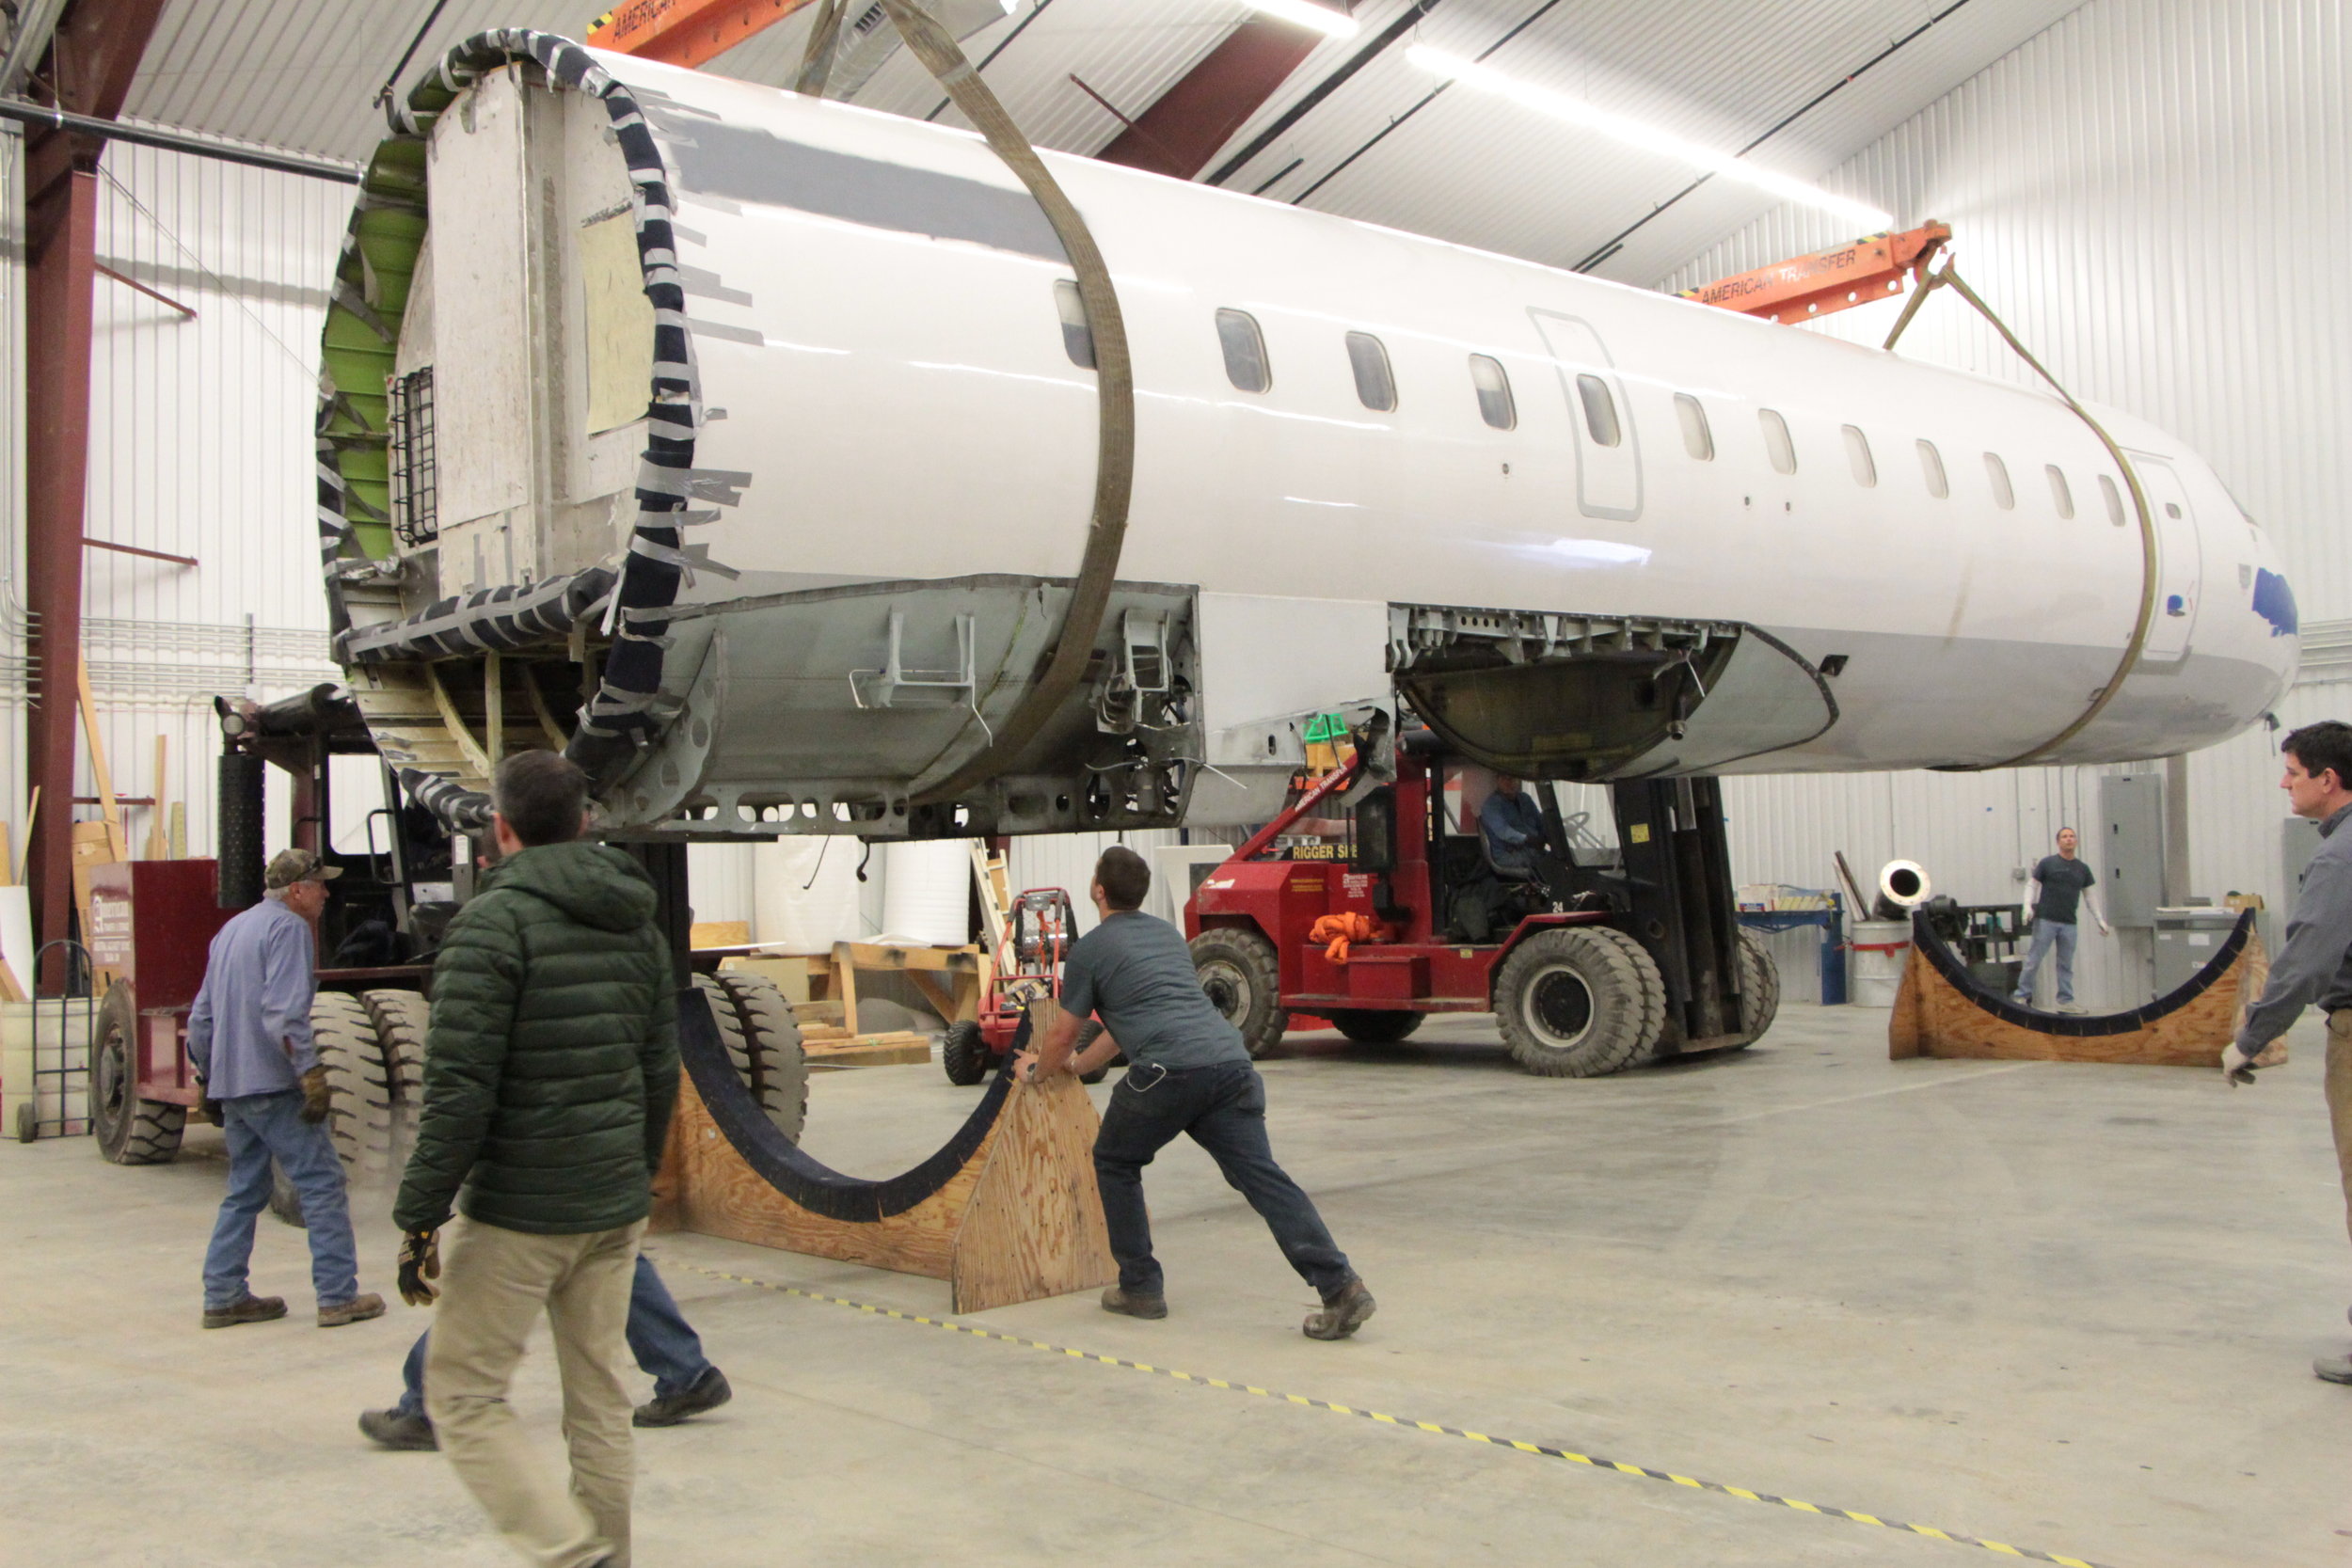 CRJ Cabin Trainer Under Construction